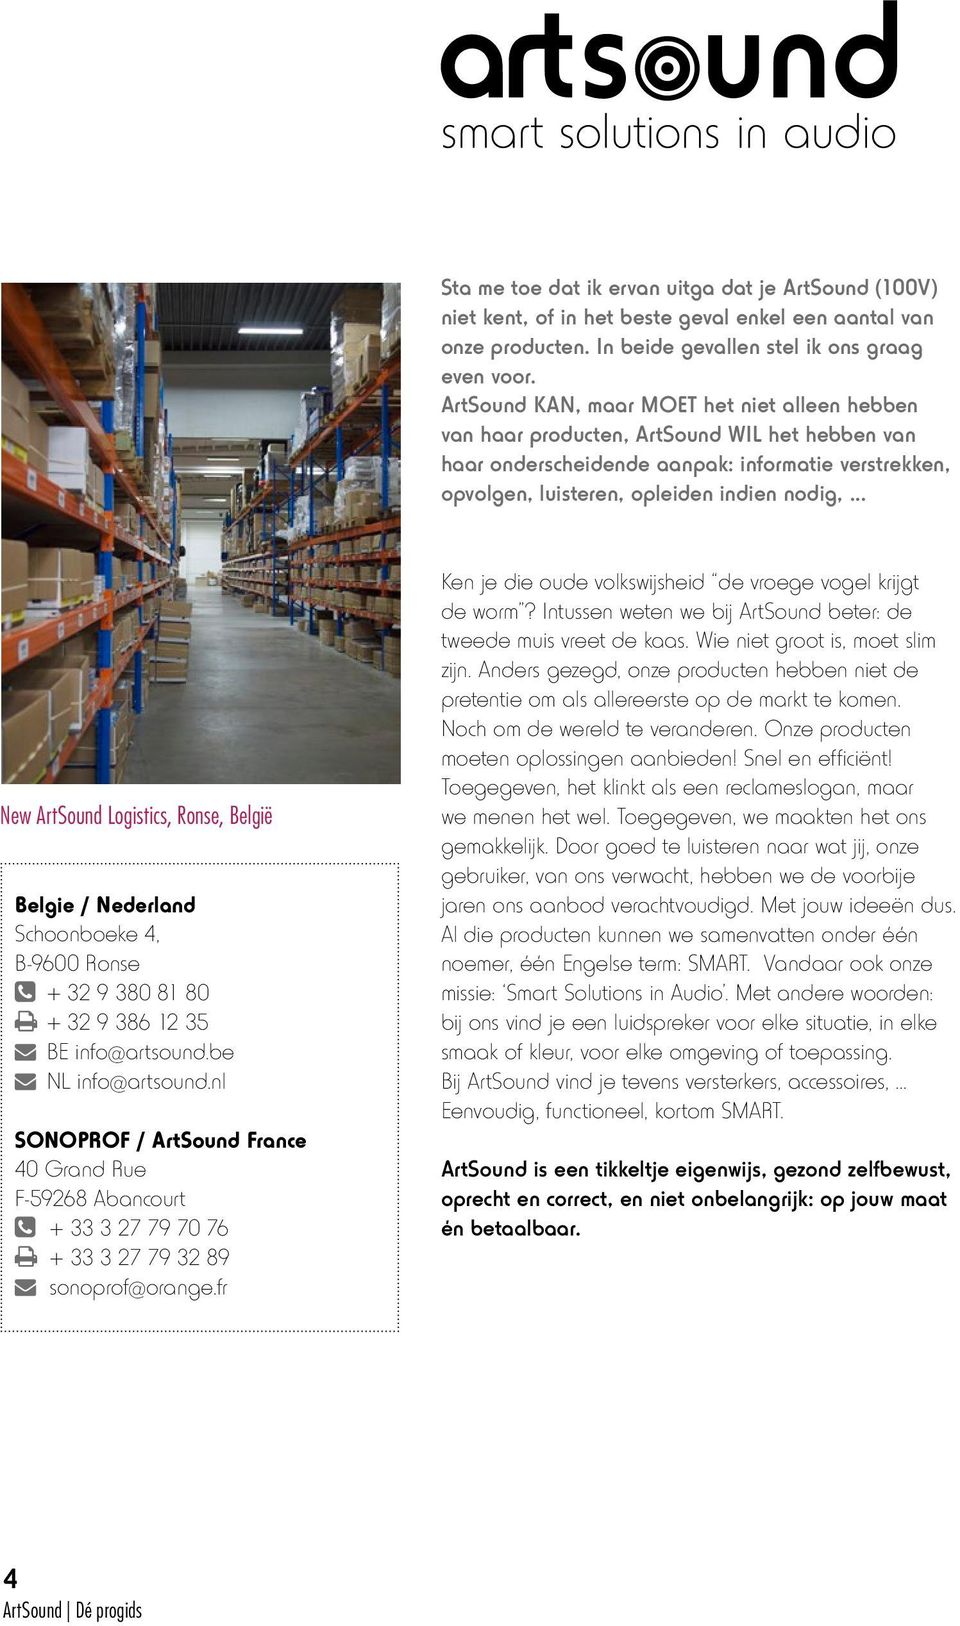 .. New ArtSound Logistics, Ronse, België Belgie / Nederland Schoonboeke 4, B-9600 Ronse + 32 9 380 81 80 + 32 9 386 12 35 BE info@artsound.be NL info@artsound.